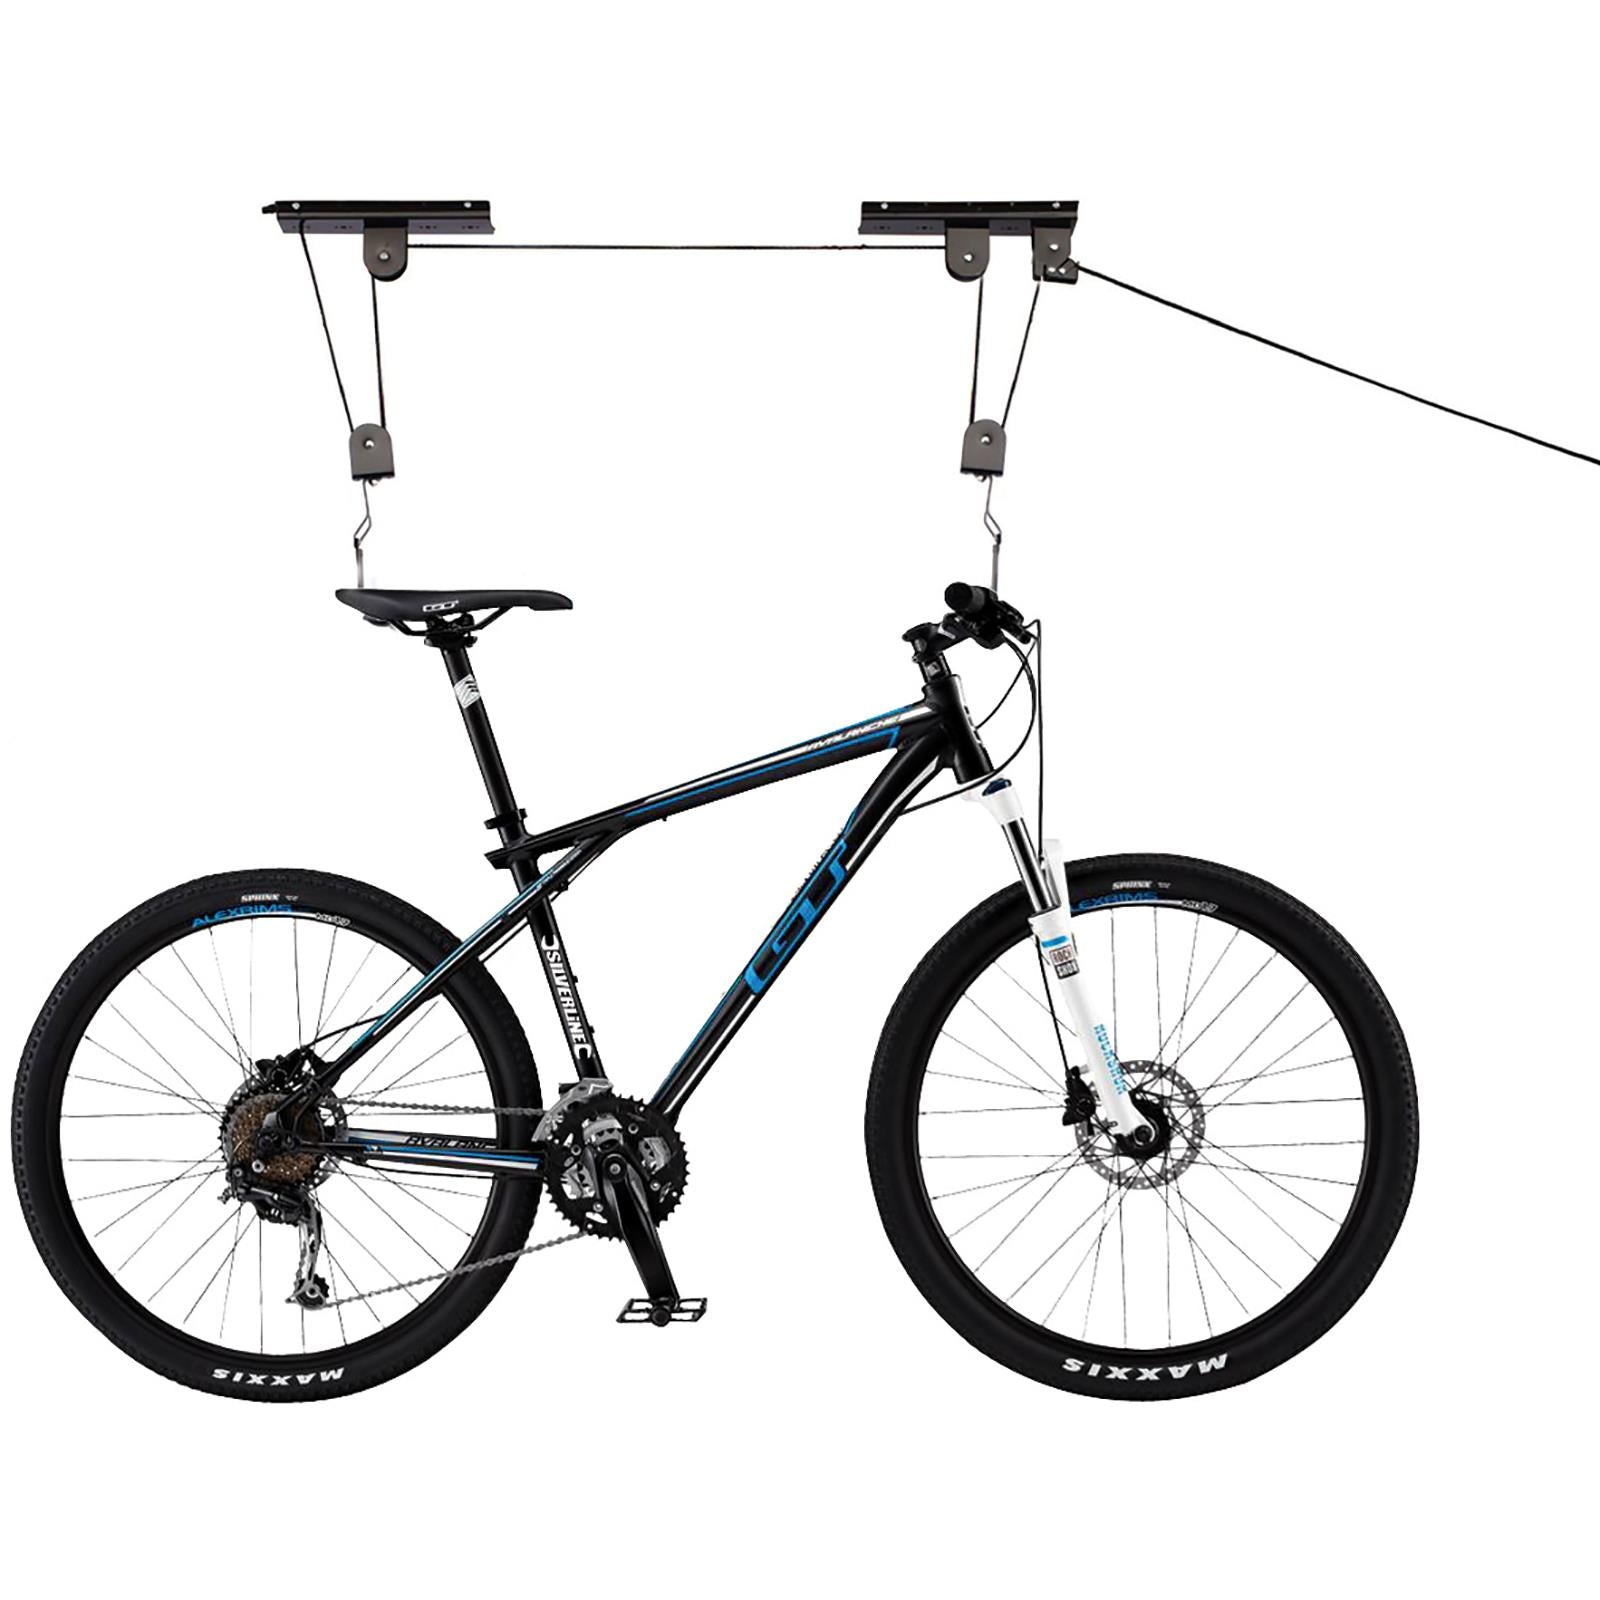 Silverline 20kg Bike Lift Bicycle Garage Rubber Hooks Locking